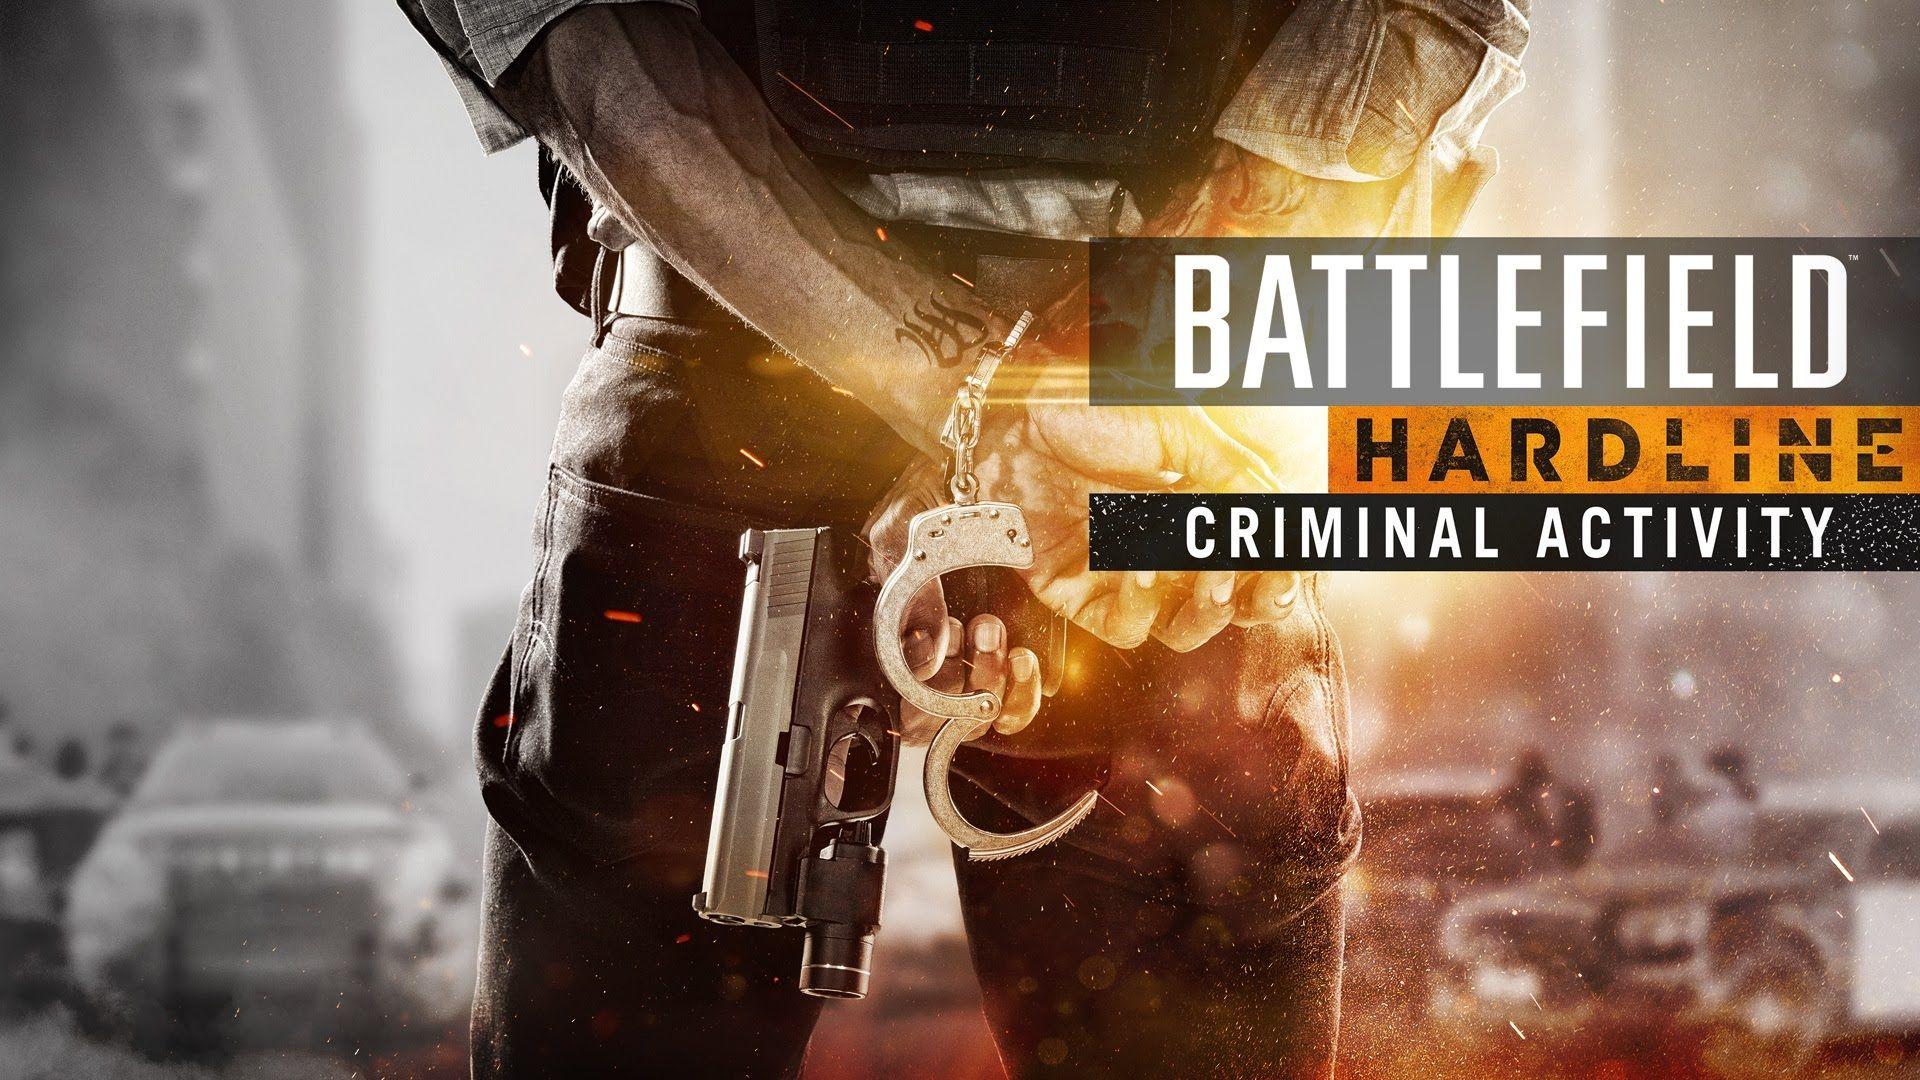 Battlefield Hardline Criminal Activity Wallpaper